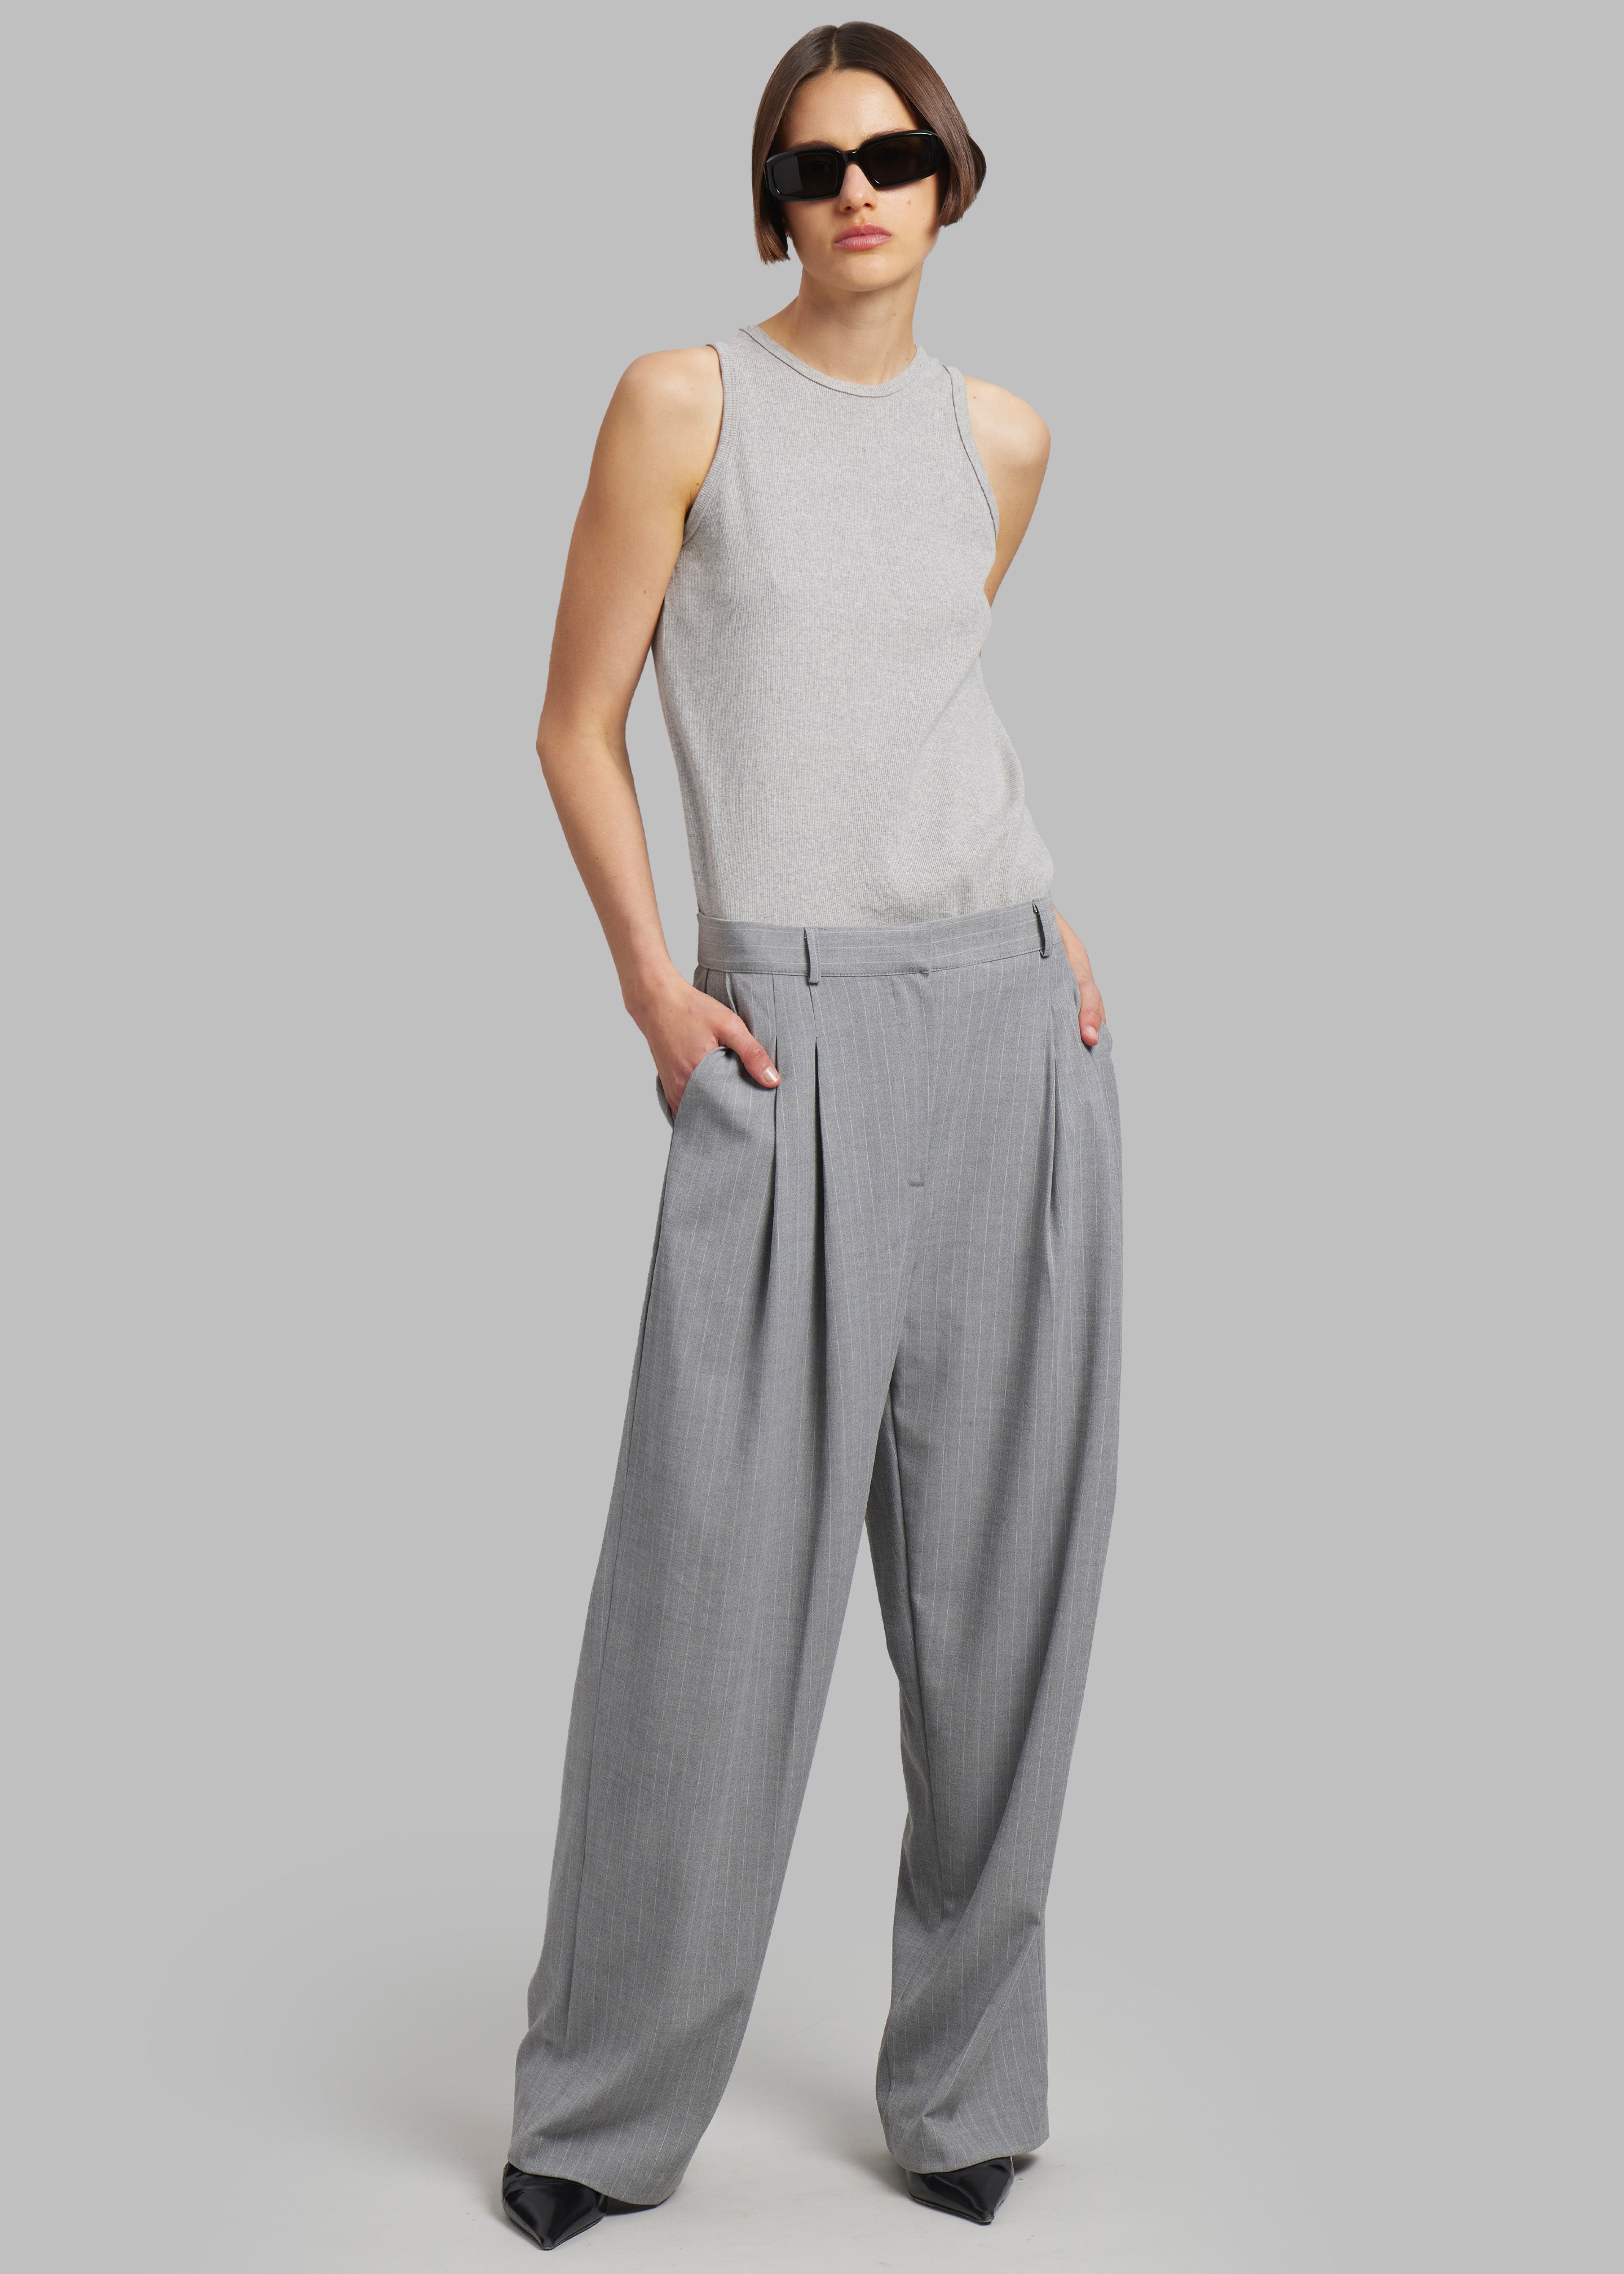 Sybil Trousers - Grey Pinstripe - 3